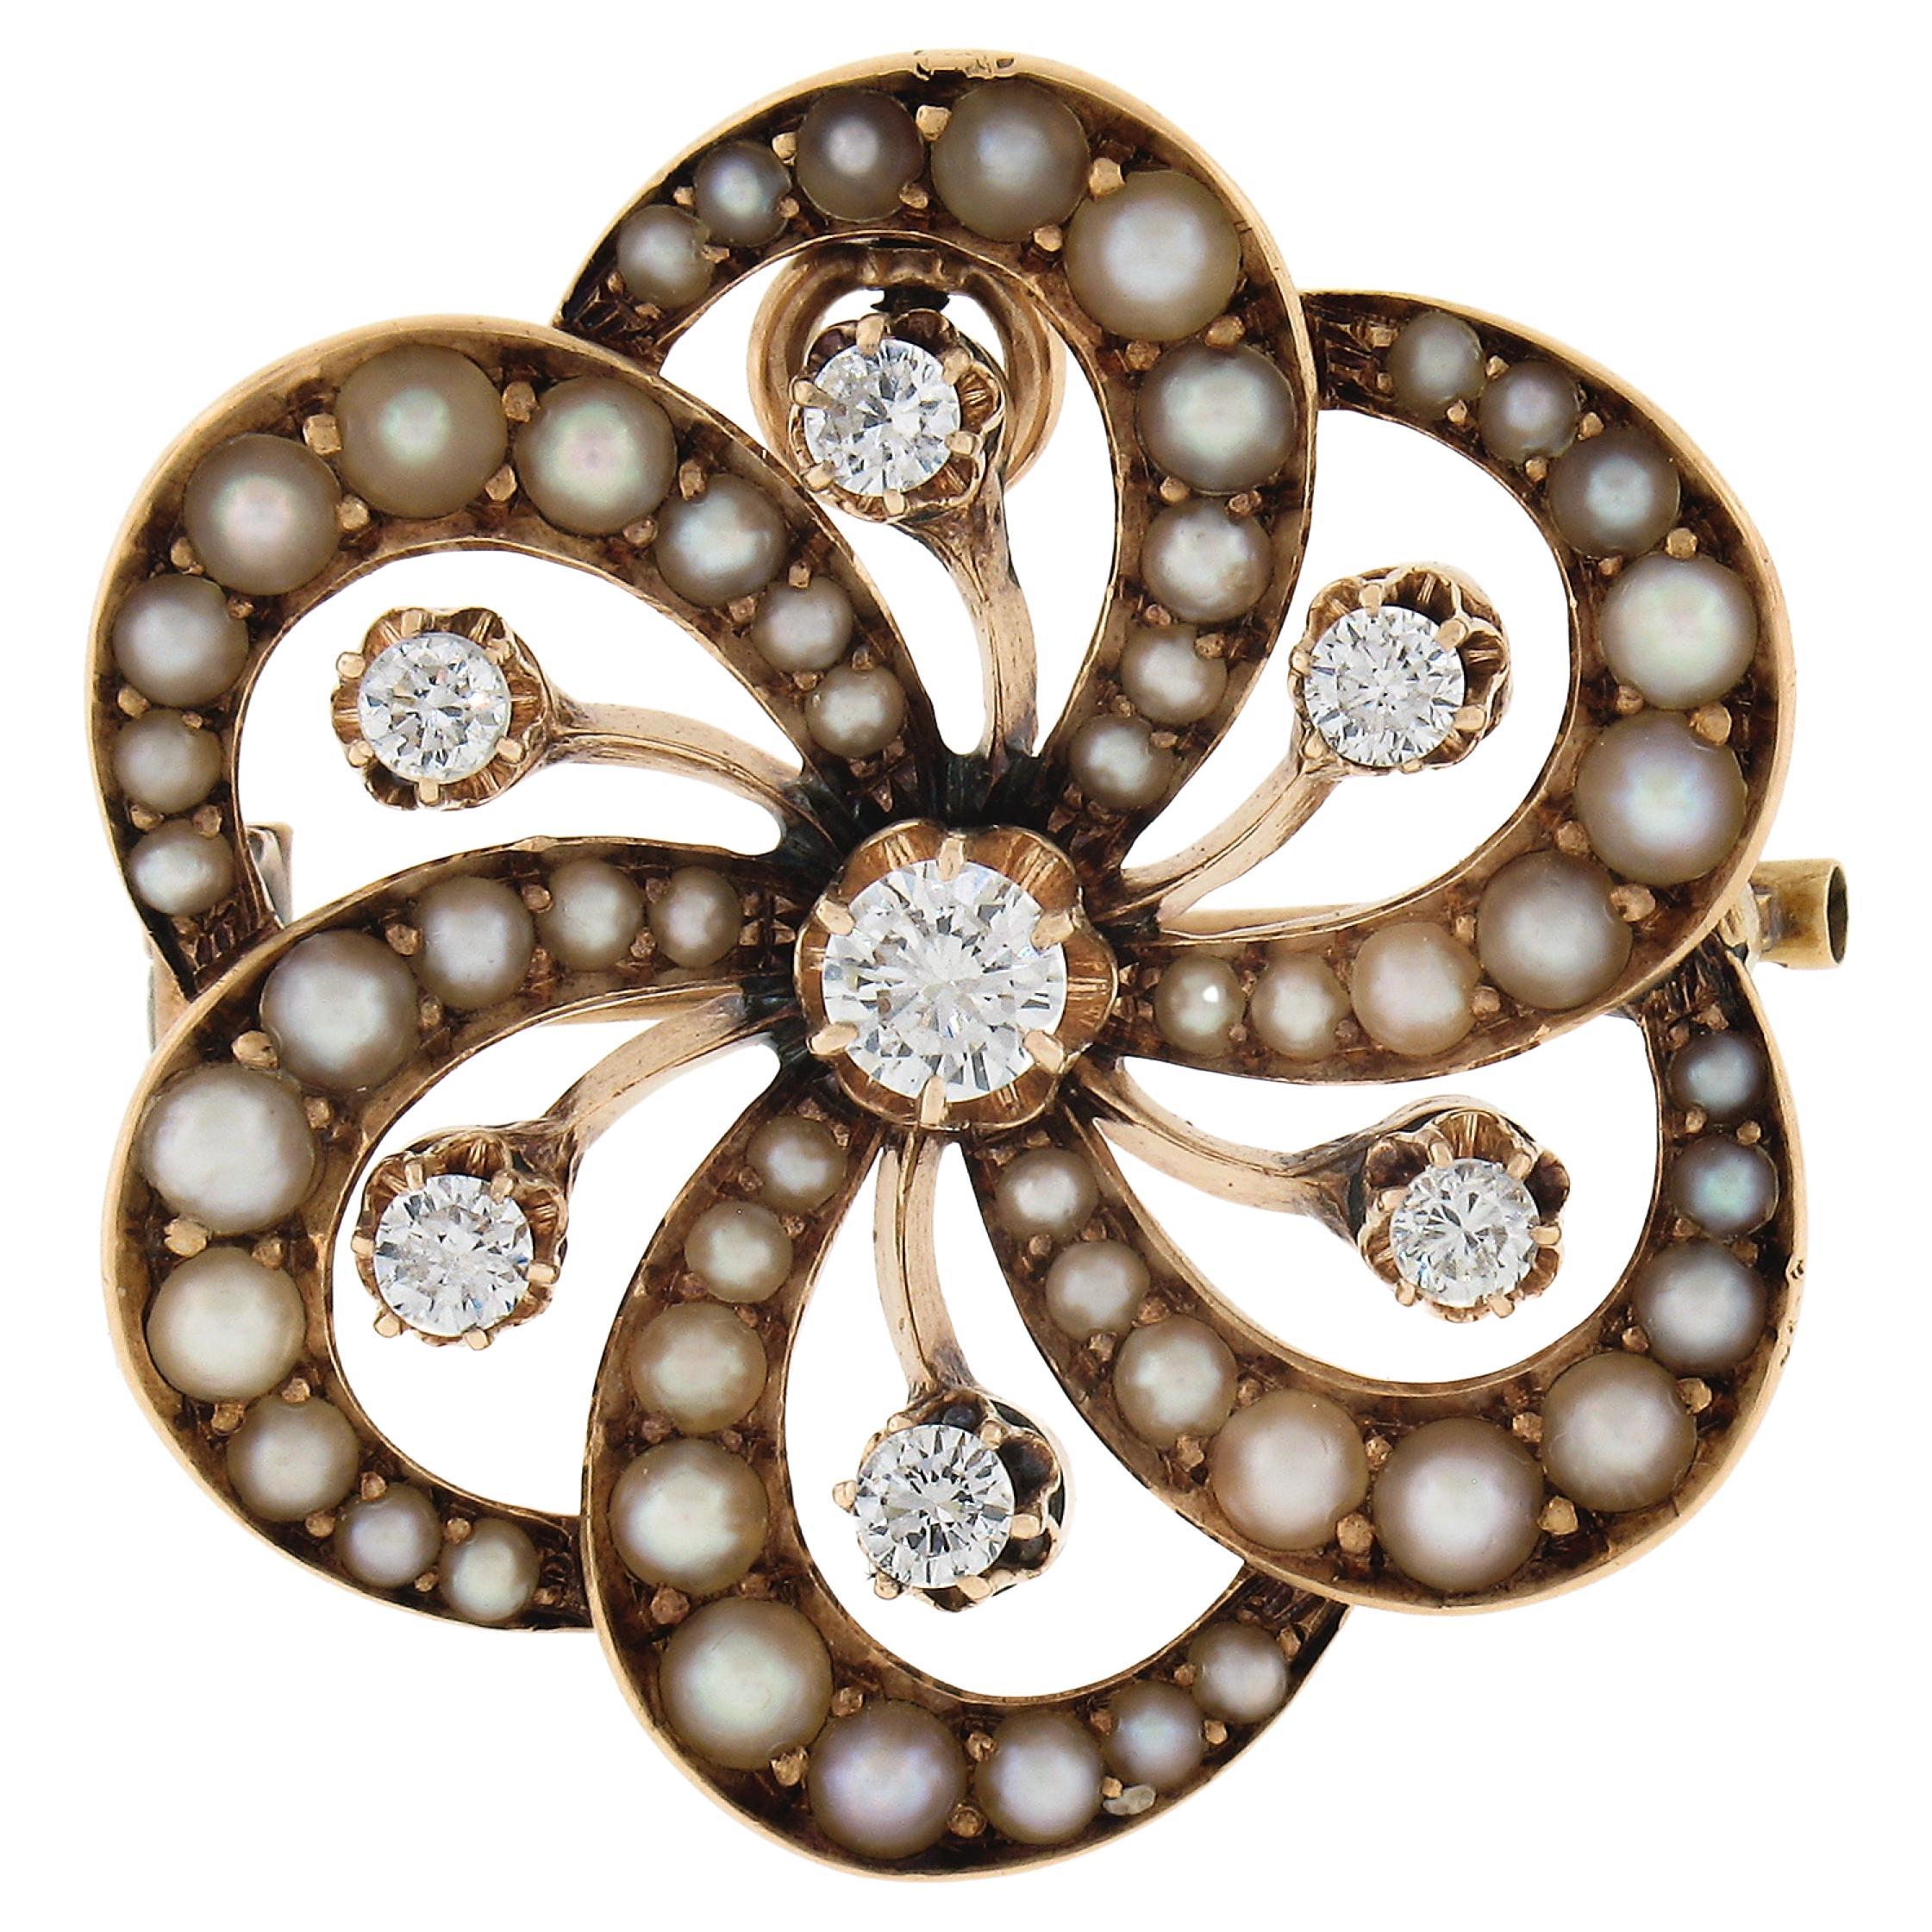 Vintage Victorian Revival 14k Gold Diamond Seed Pearl Flower Pin Brooch Pendant